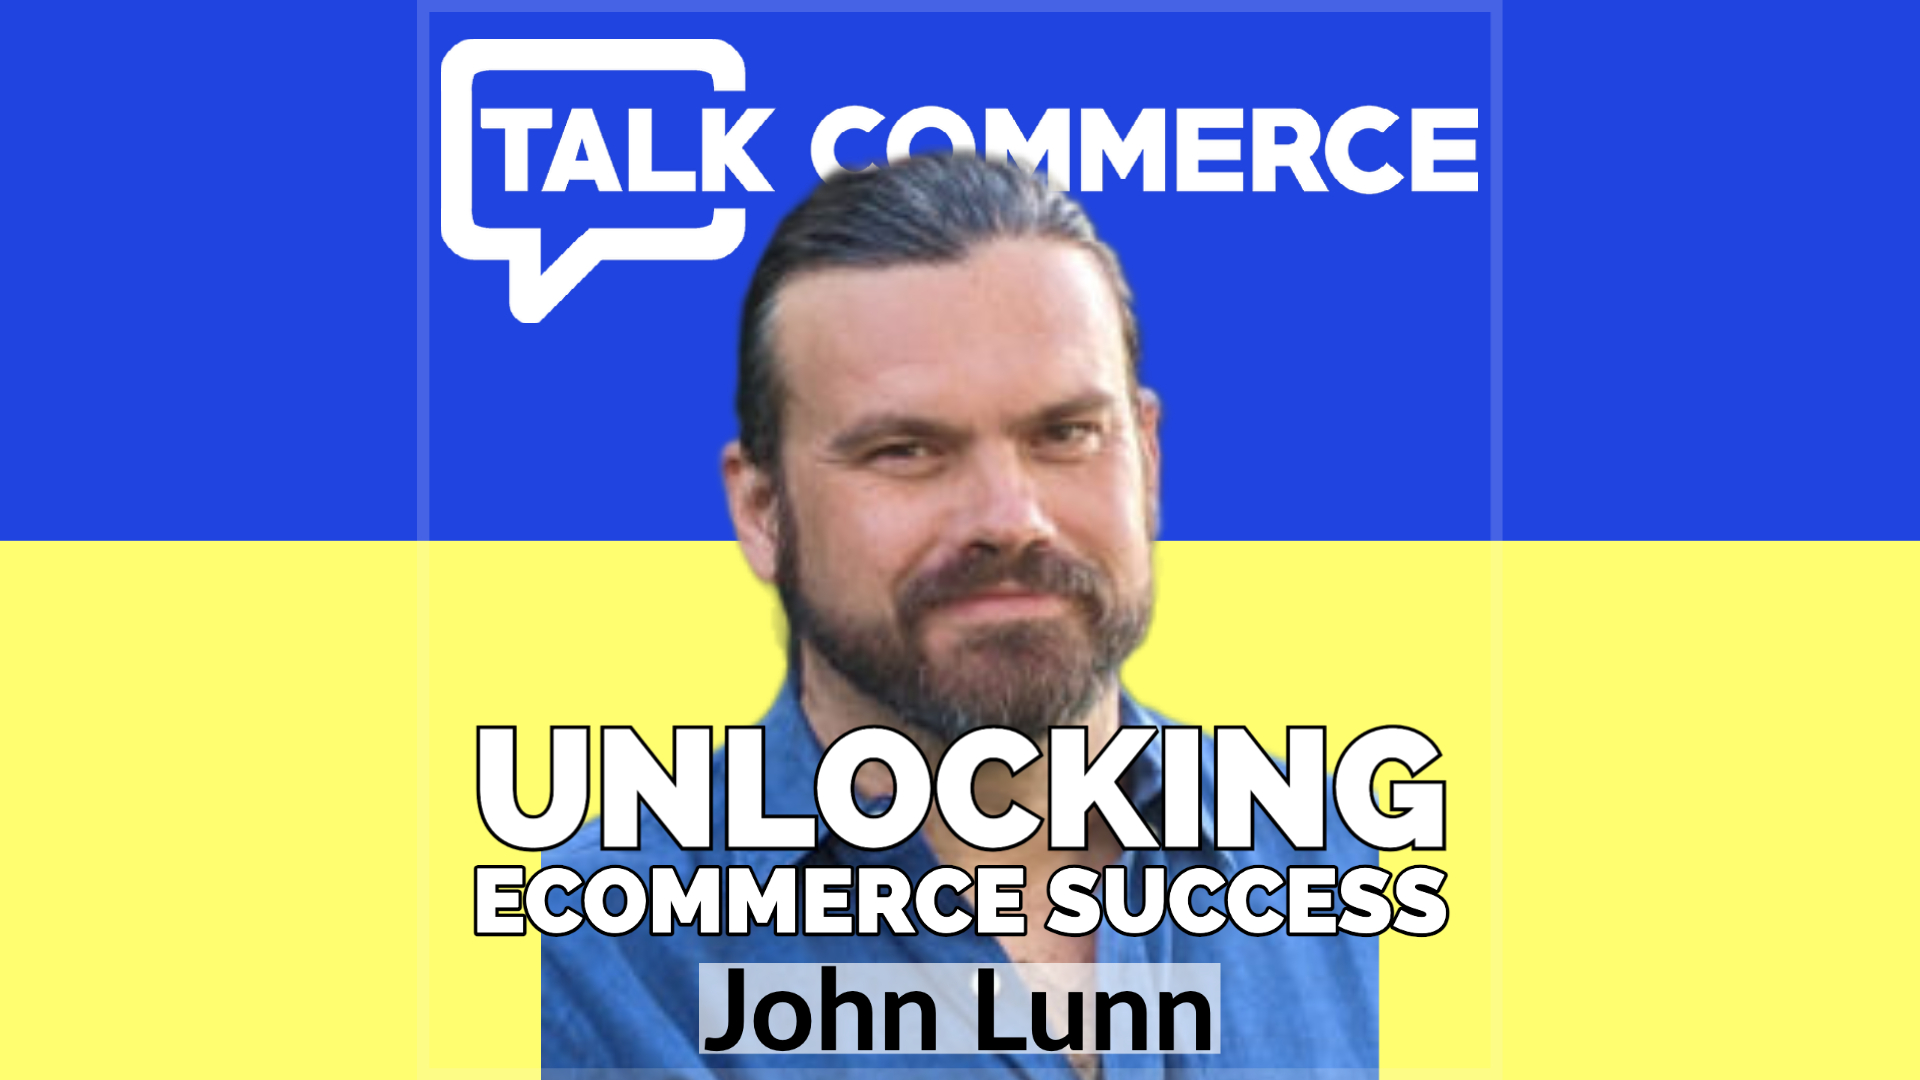 Talk-Commerce-John Lunn